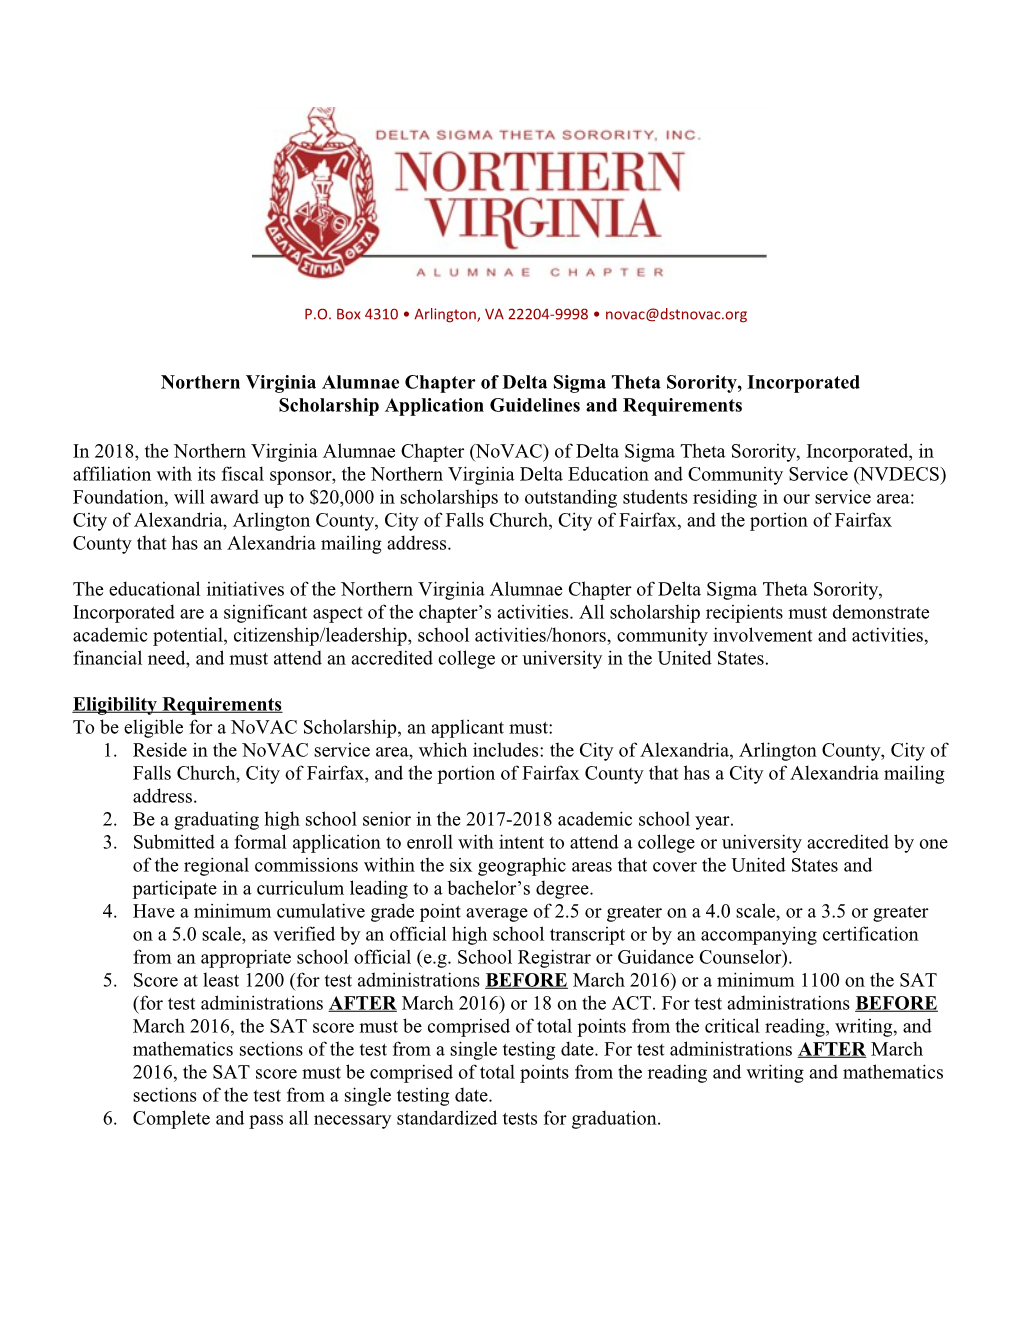 Northern Virginia Alumnae Chapter of Delta Sigma Theta Sorority, Incorporated